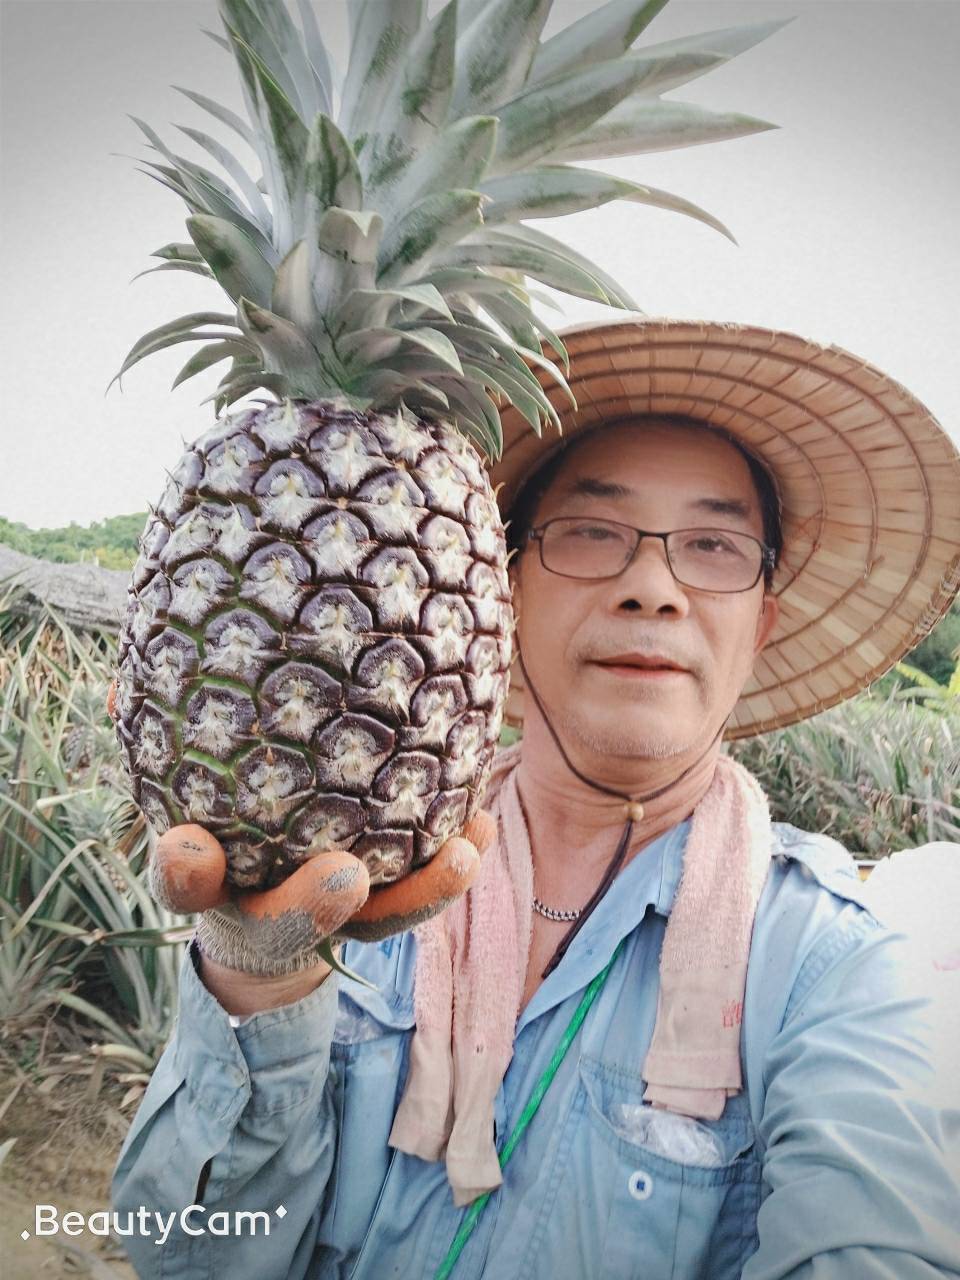 Taiwan pineapple farmer 